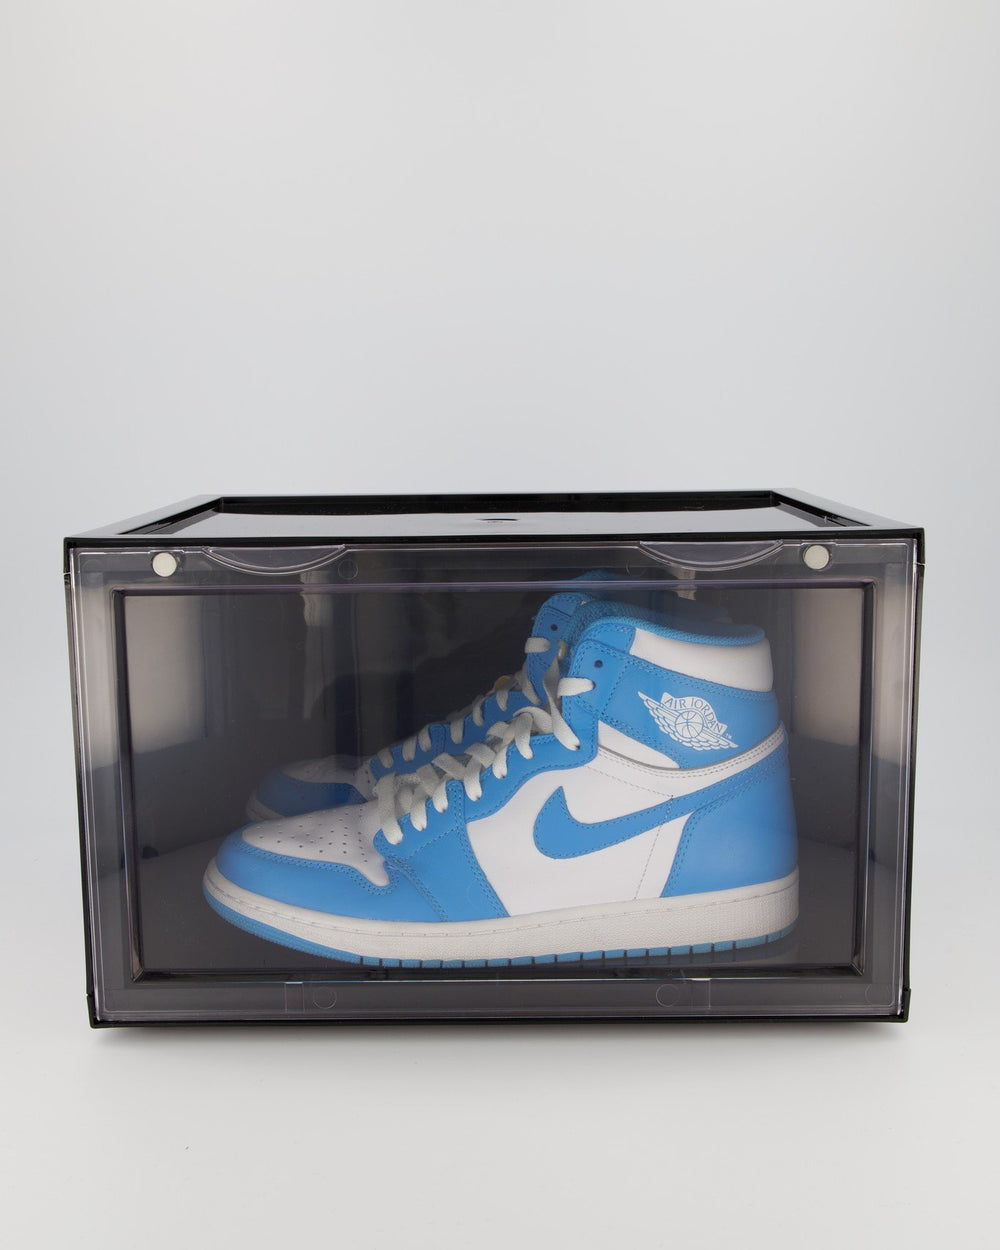 CT Sneaker Box Side Drop Display (2 Boxes) - Black